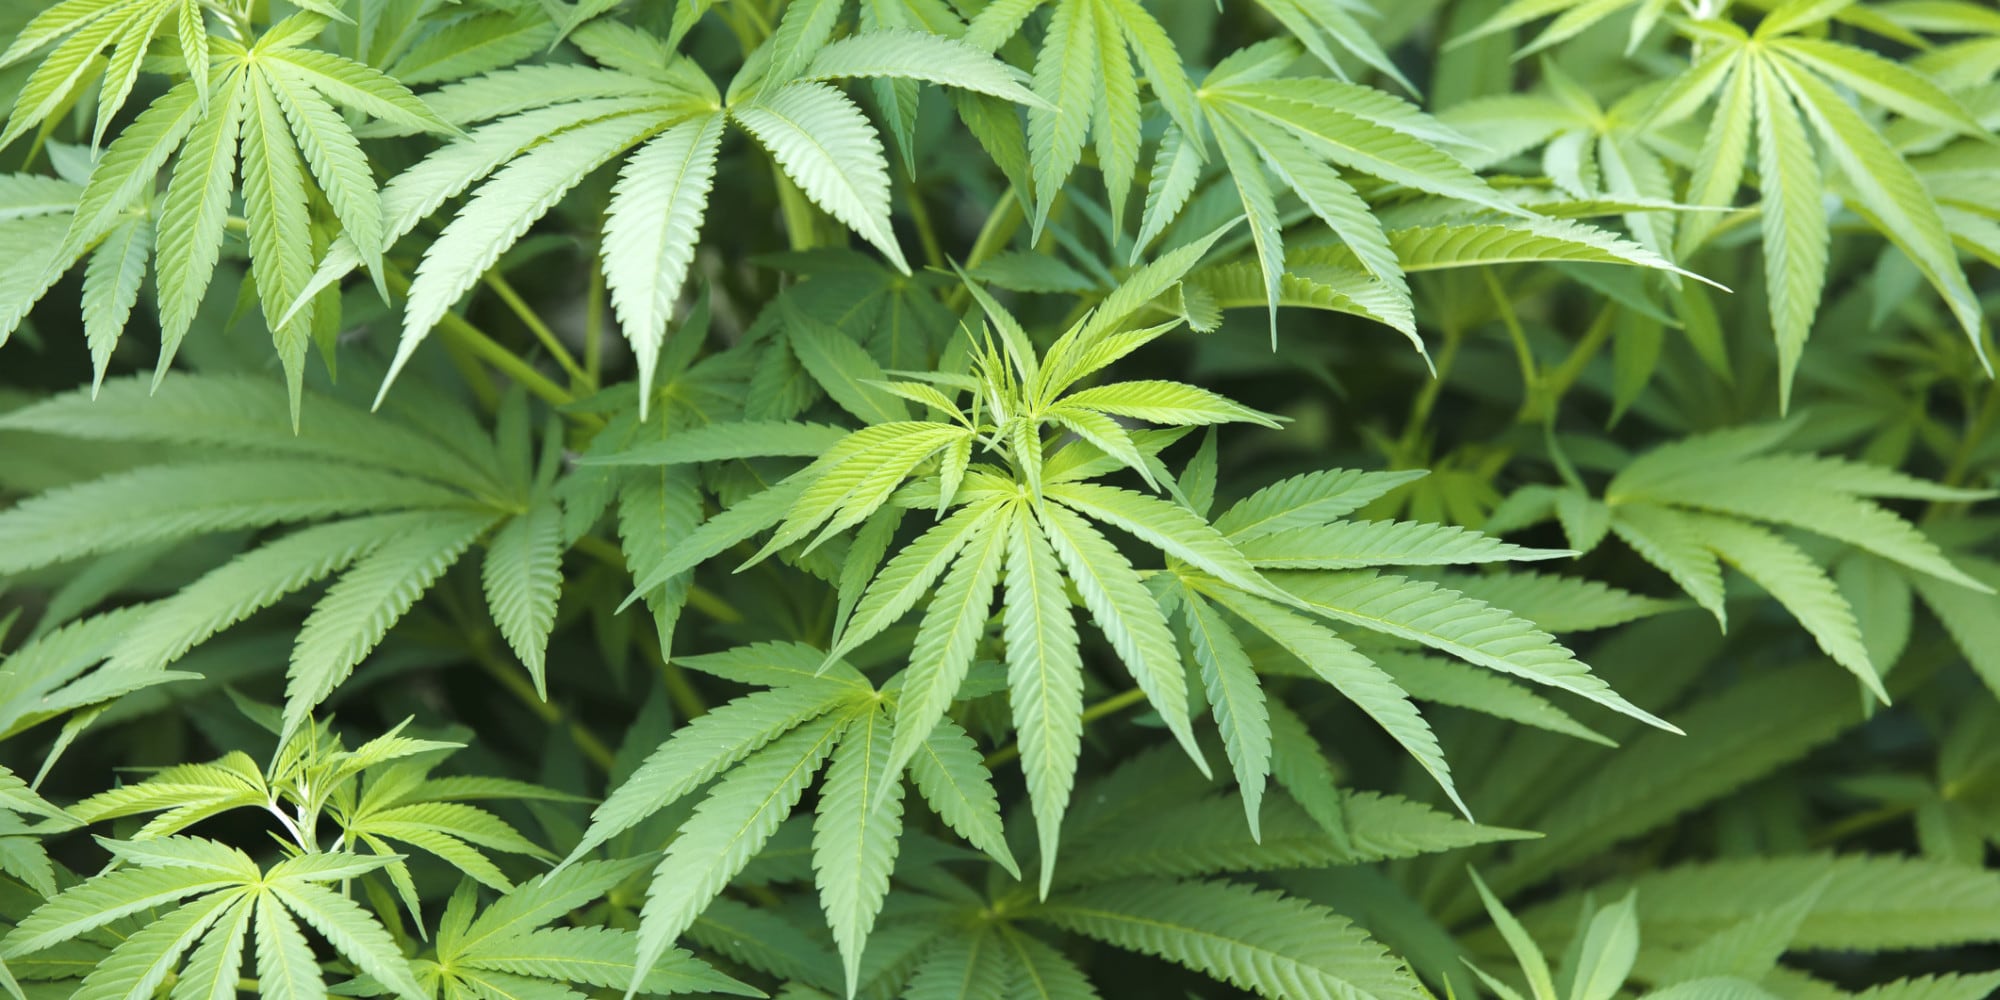 Legal cannabis: help B.C. lead the way on safety, health